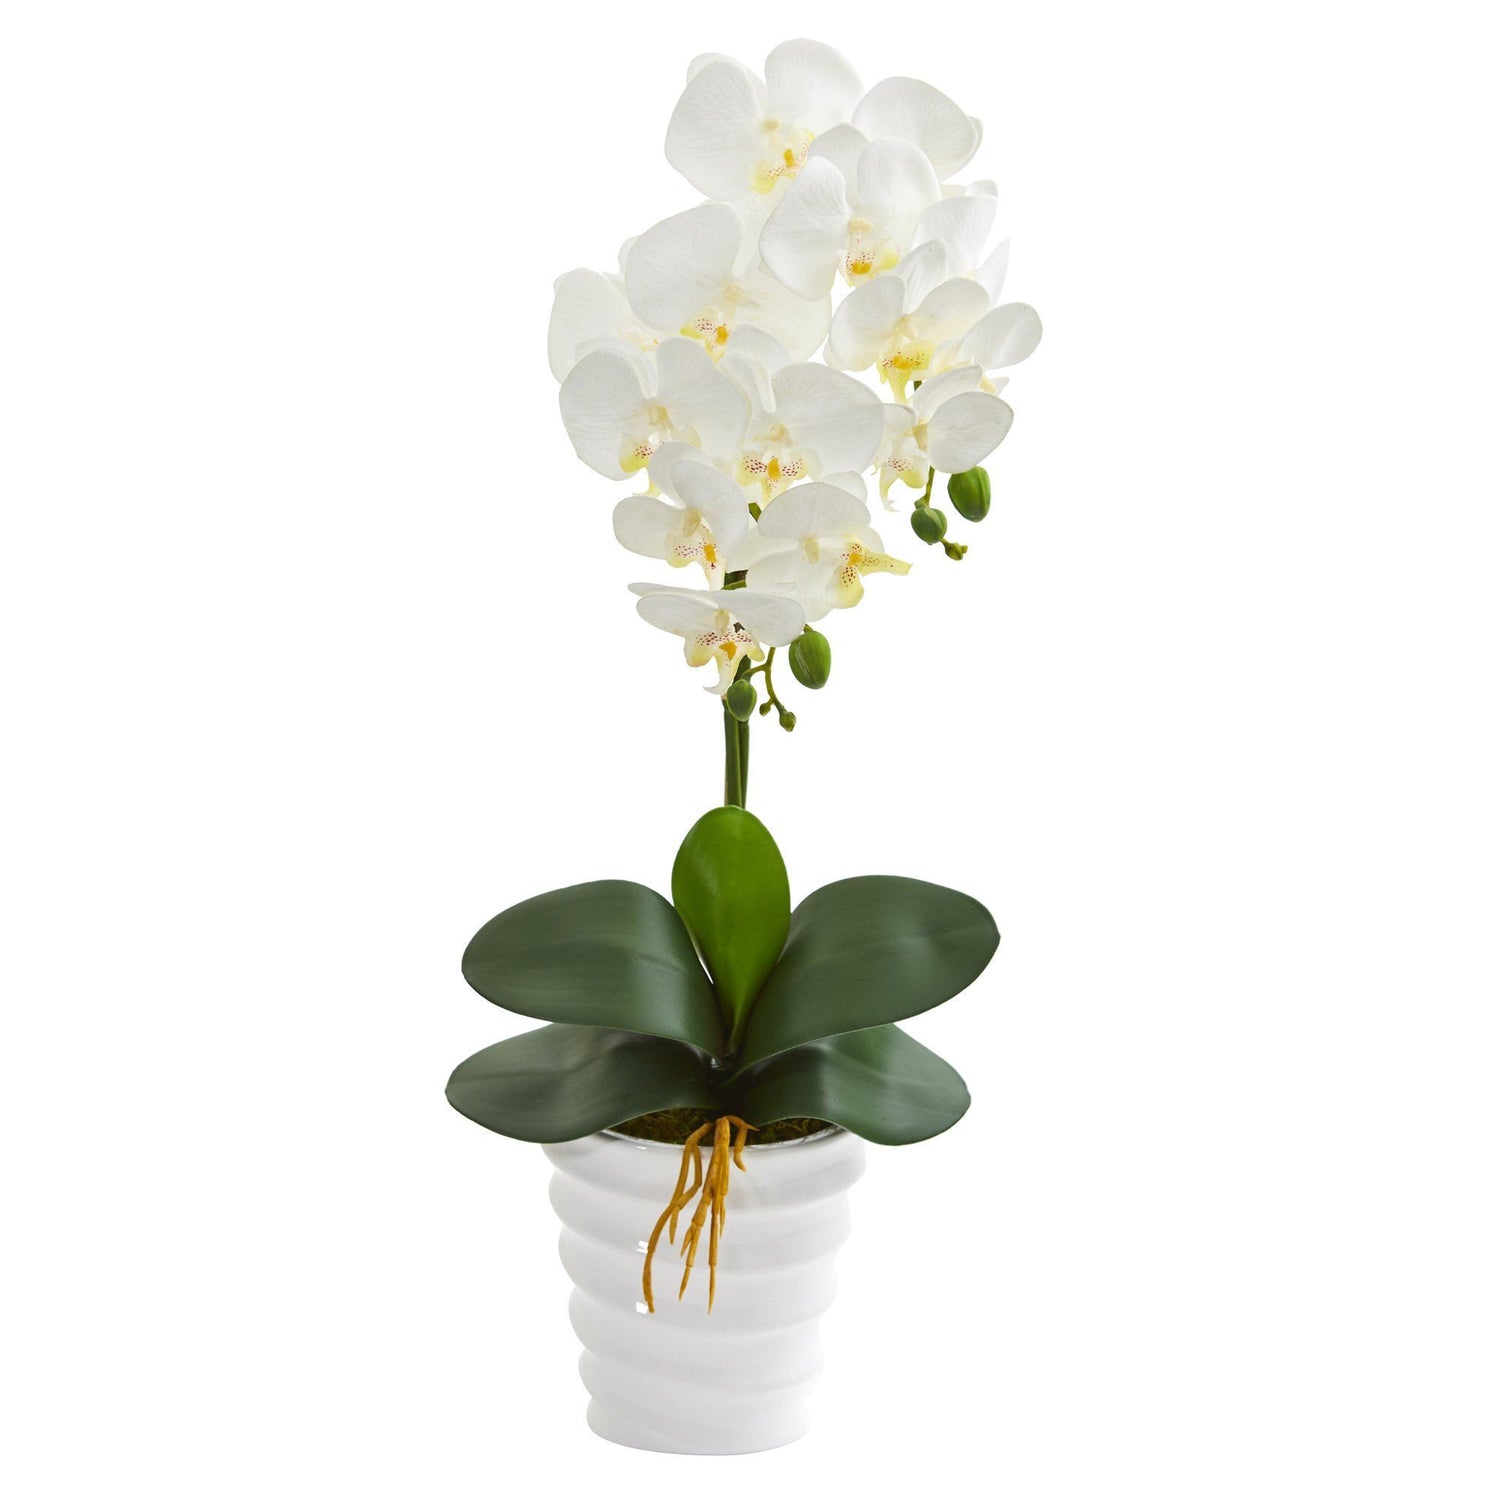 23” Phalaenopsis Orchid Artificial Arrangement in Swirl White Vase